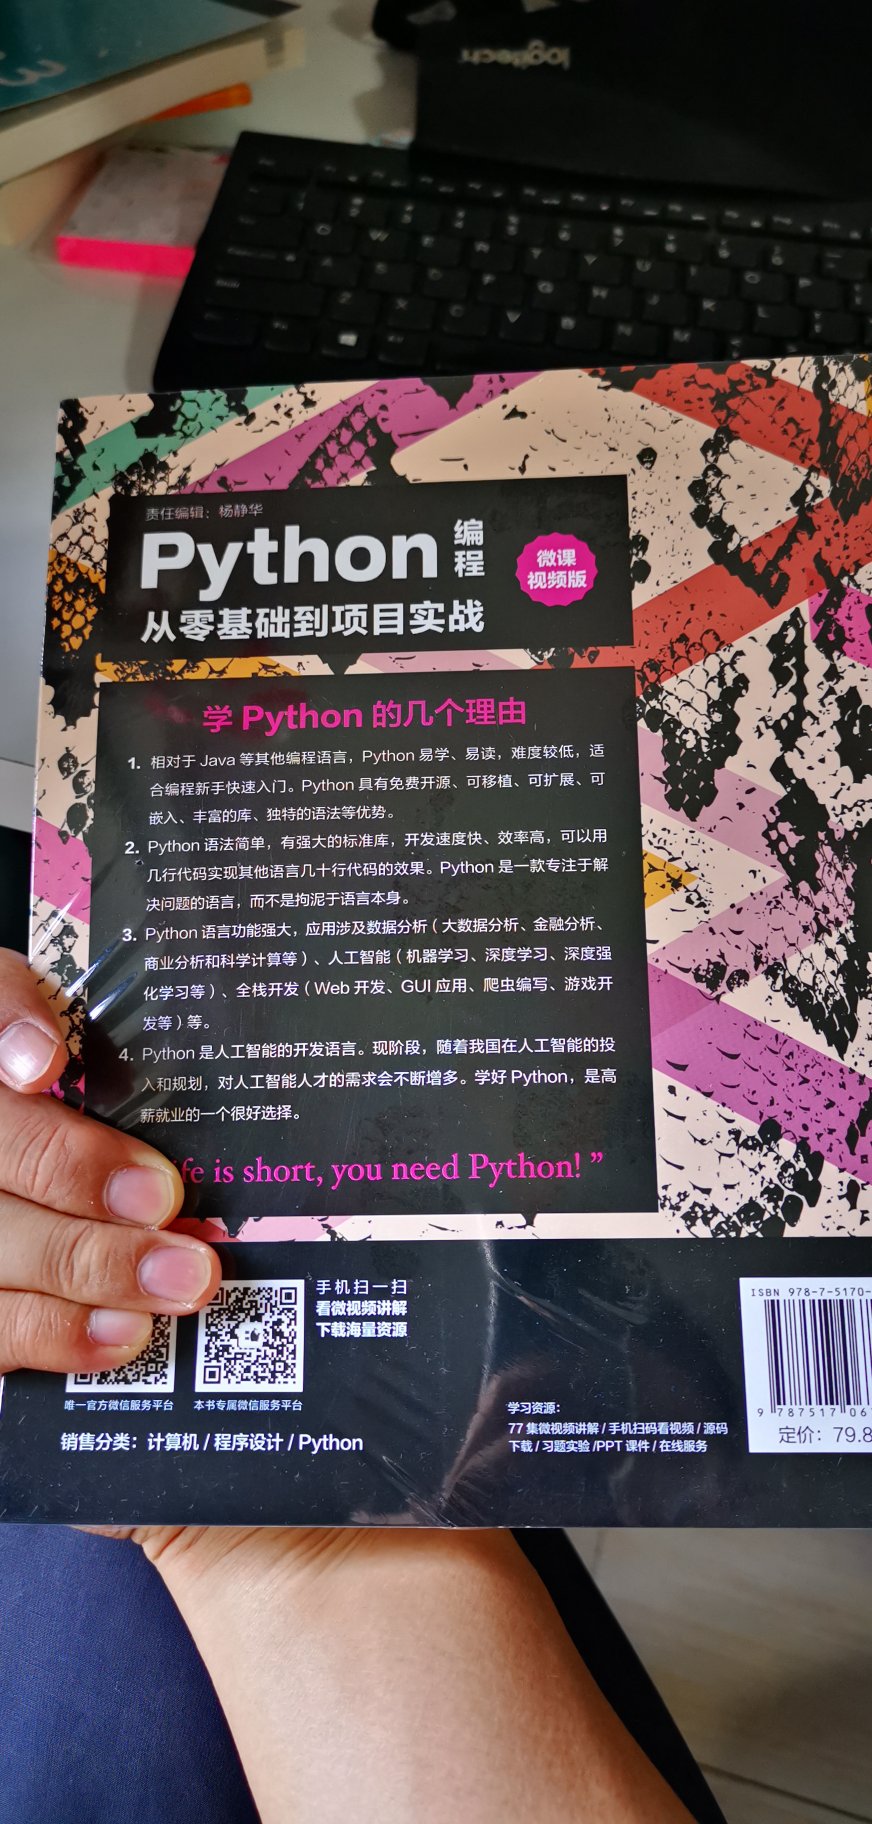 Python真的是一门很实用的语言，今年要拿下他